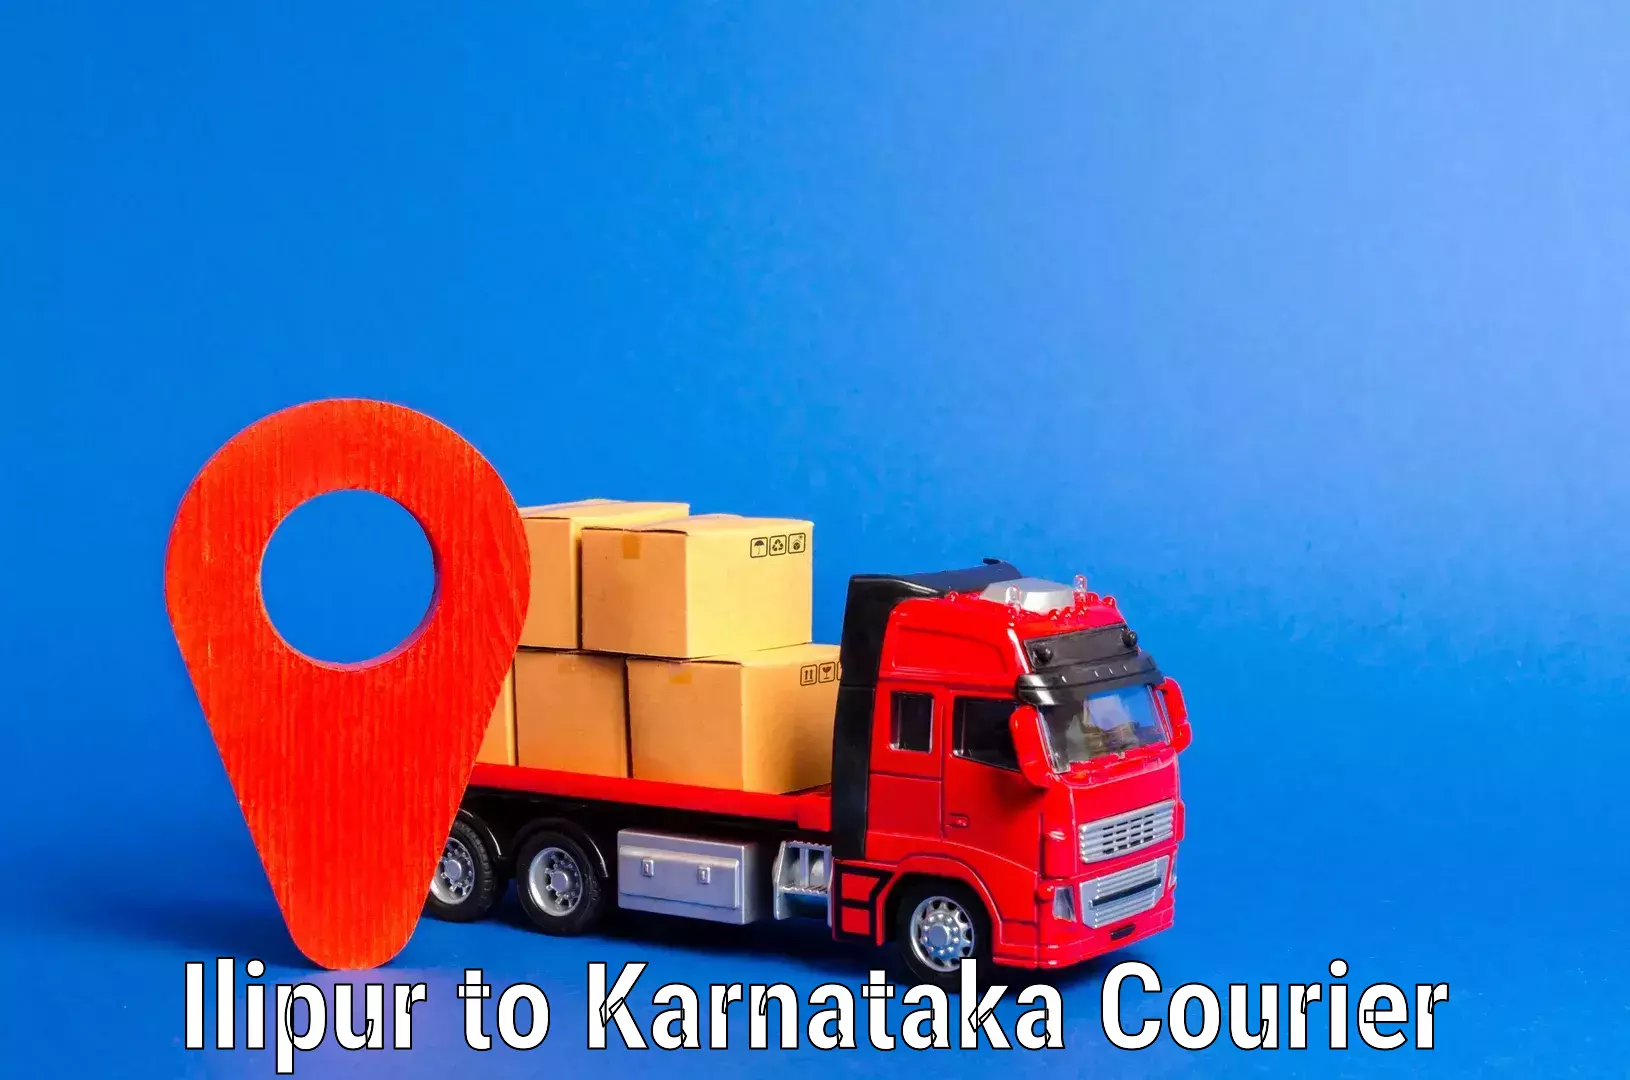 Home relocation experts Ilipur to Karnataka